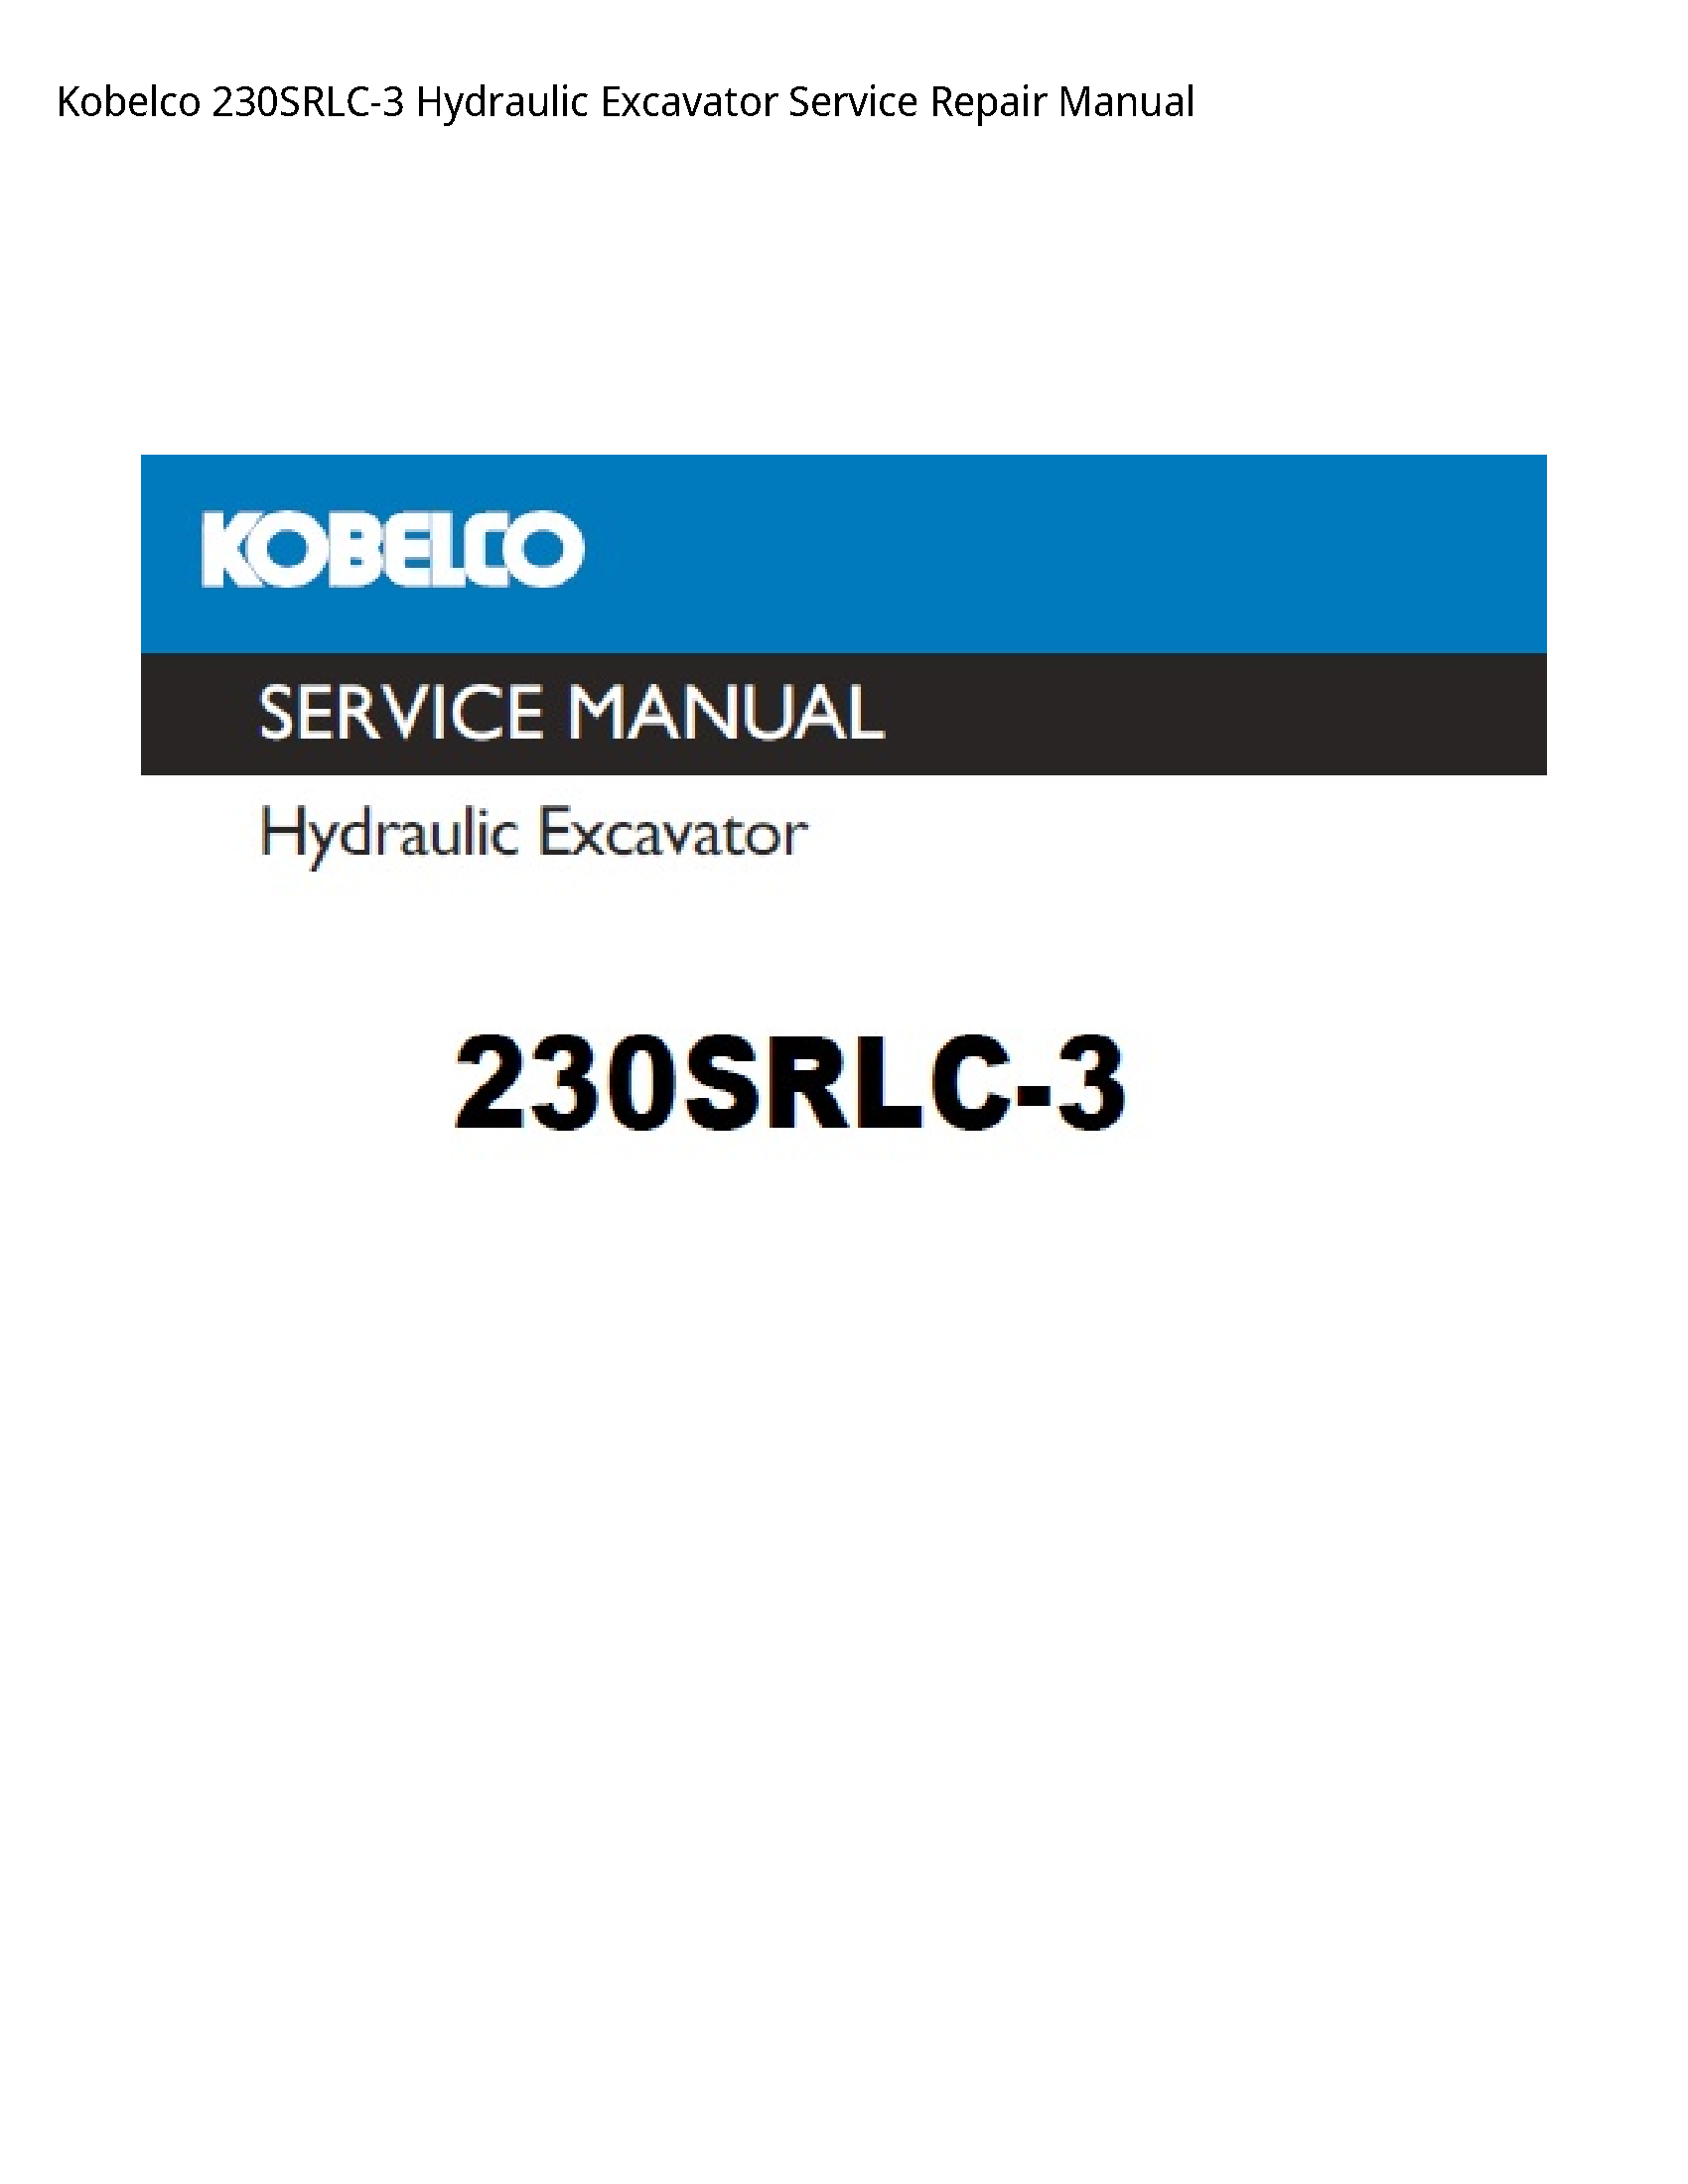 Kobelco 230SRLC-3 Hydraulic Excavator manual